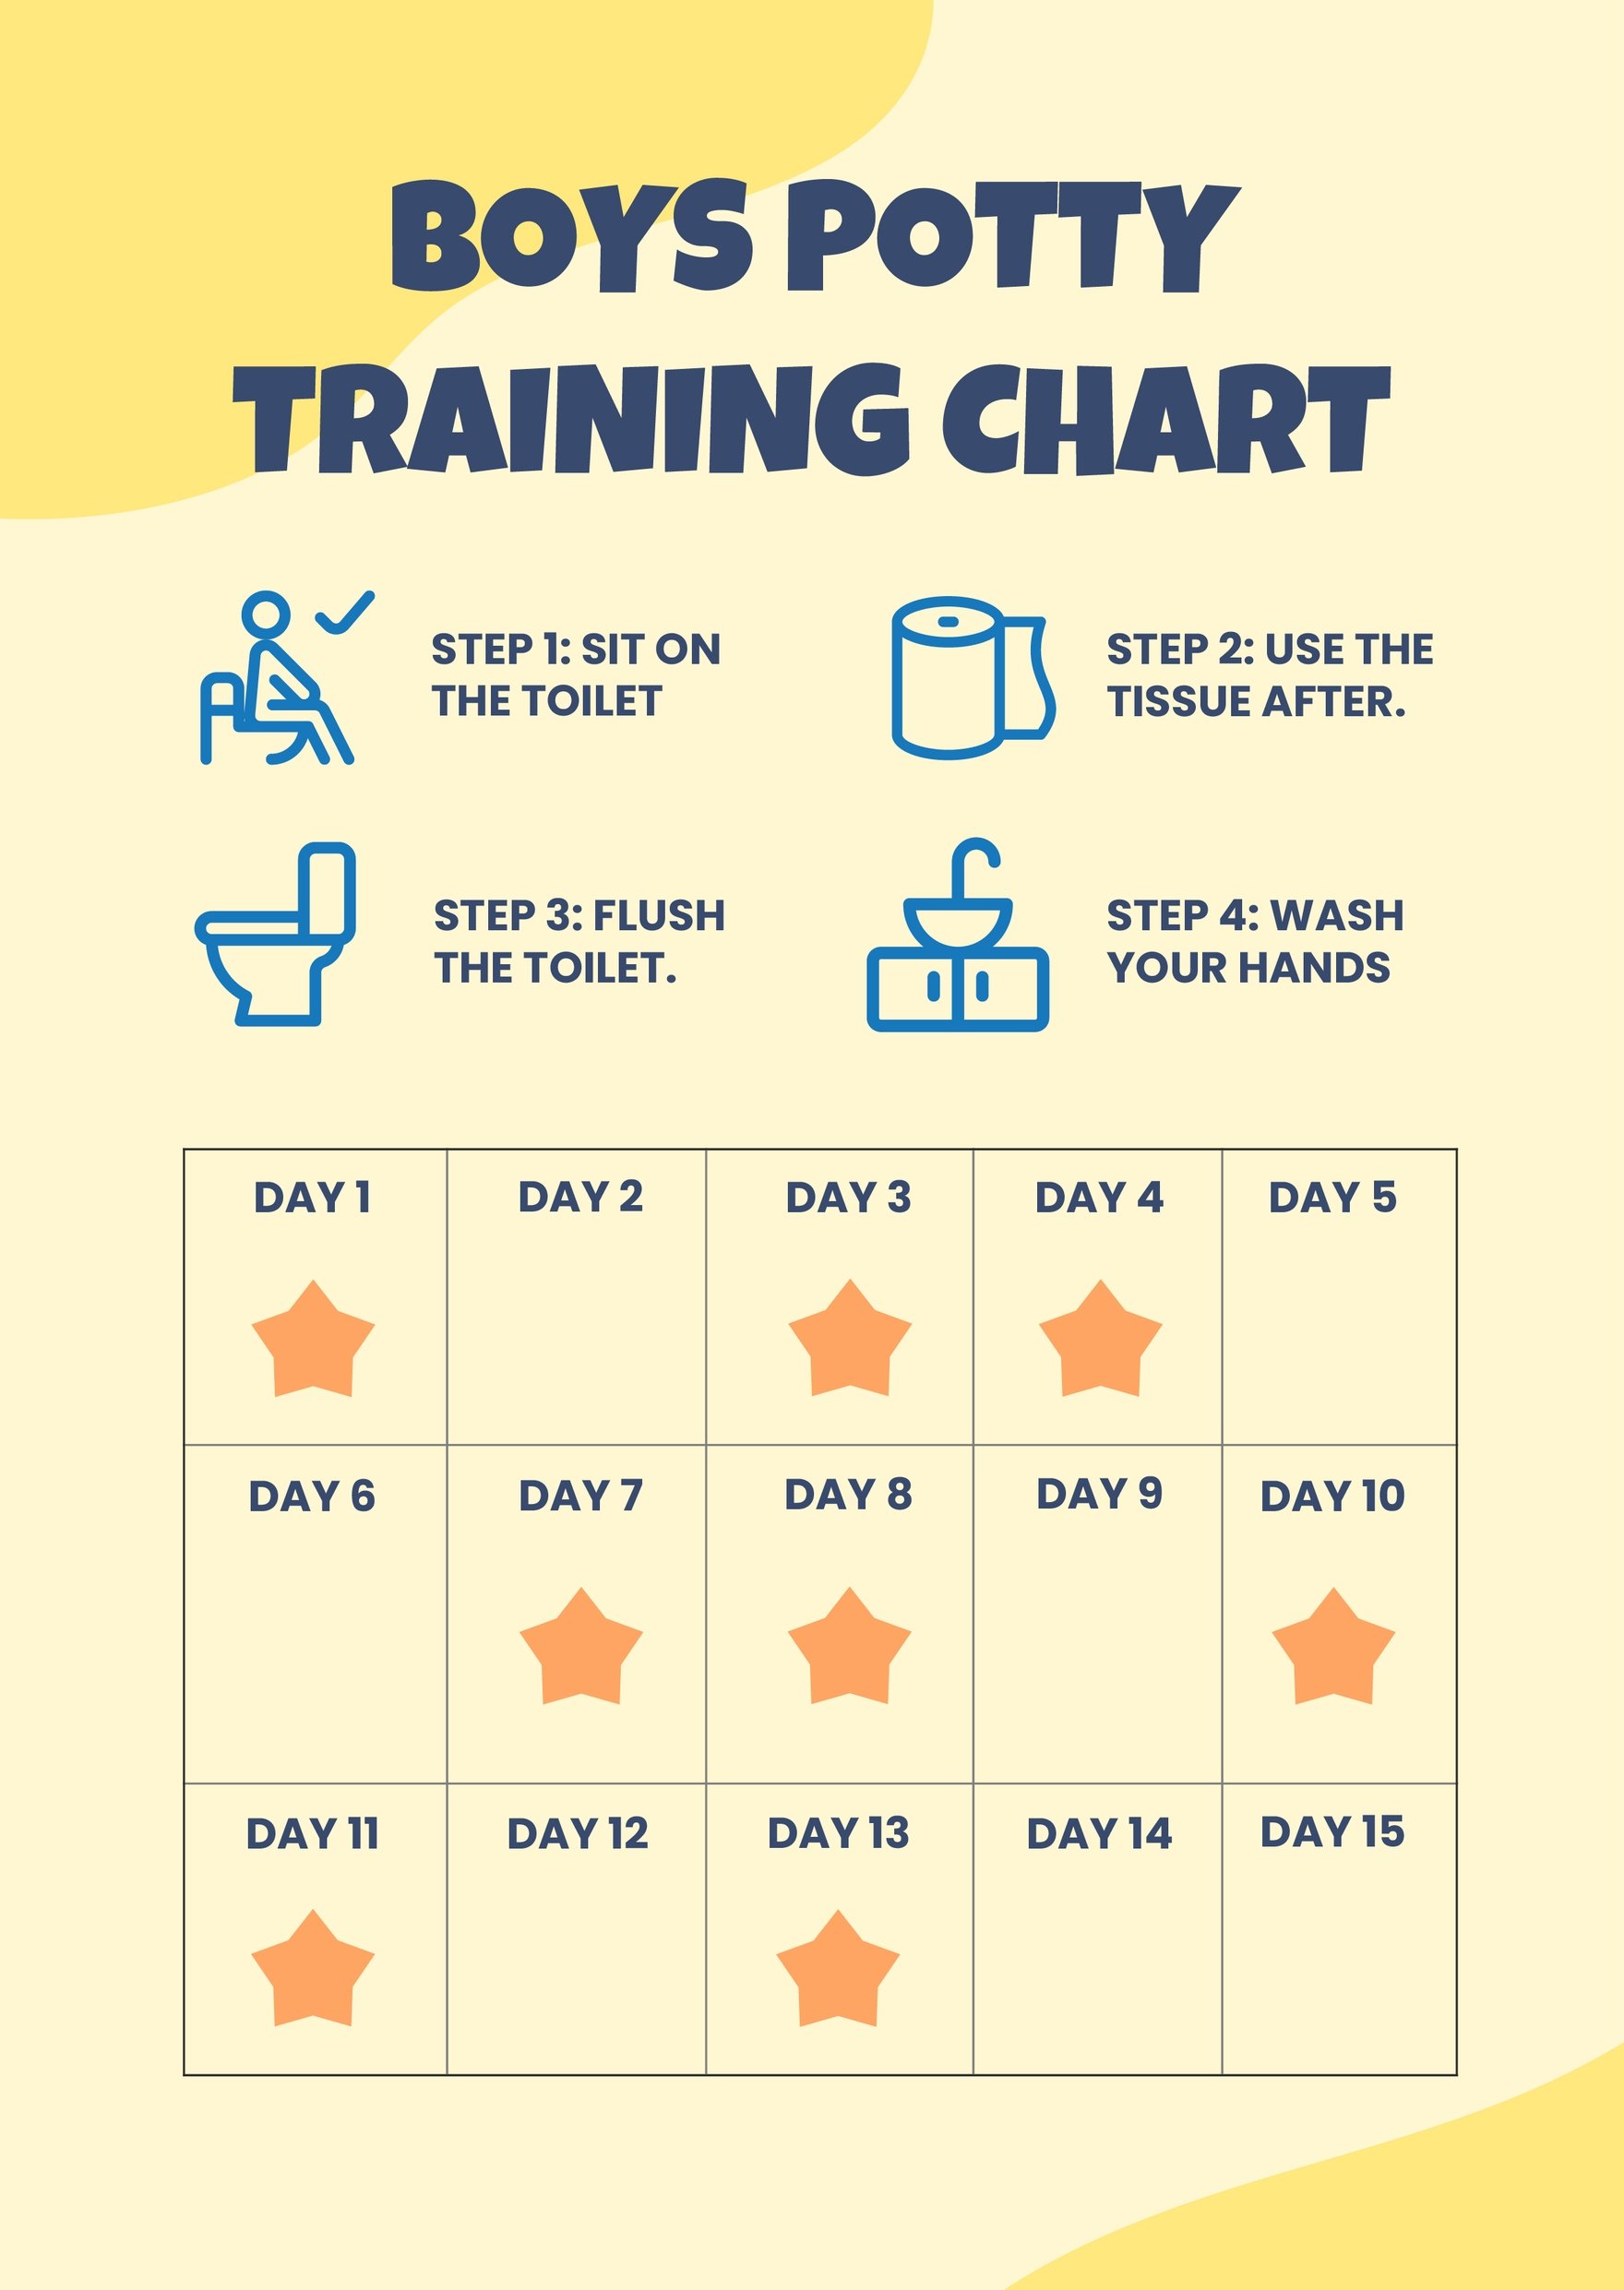 Boys Potty Training Chart in PDF, Illustrator